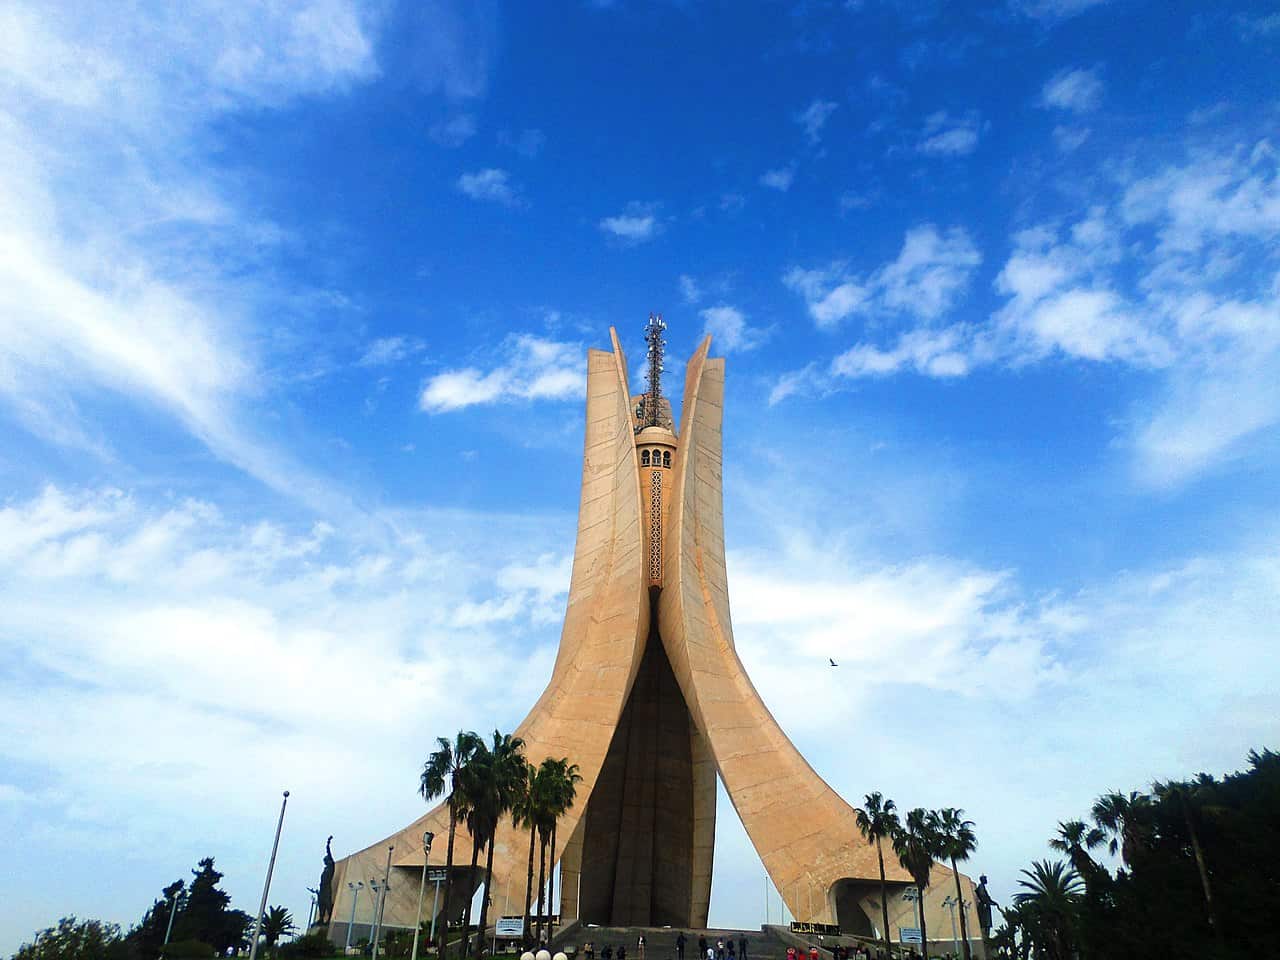 National monument of Algeria - The Maqam Echahid